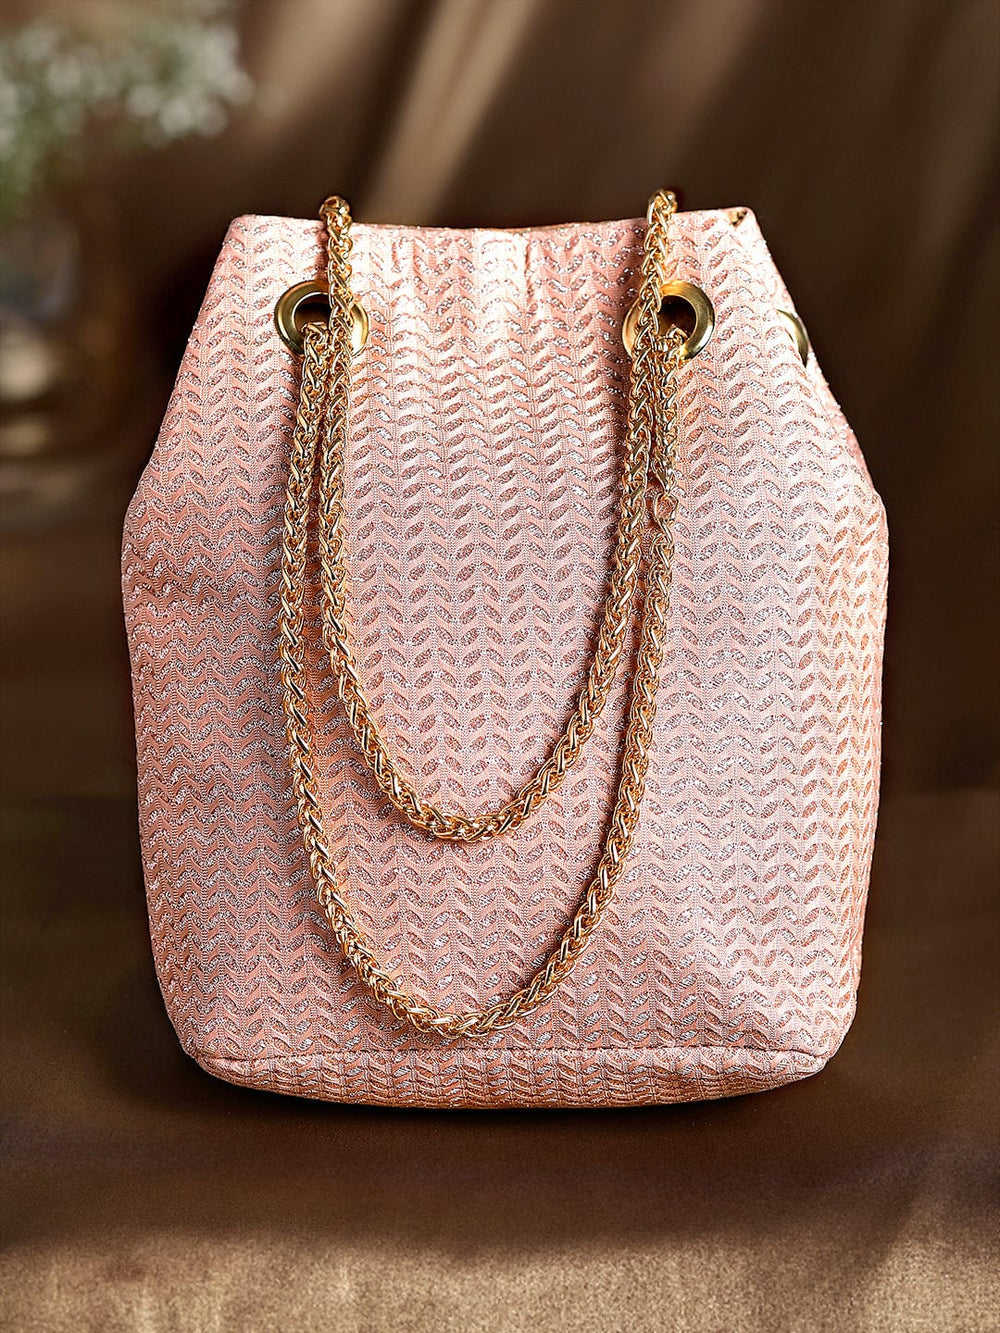 Rubans Baby Pink Colour Potli Bag With Golden Print And Golden Chain Design. Handbag & Wallet Accessories